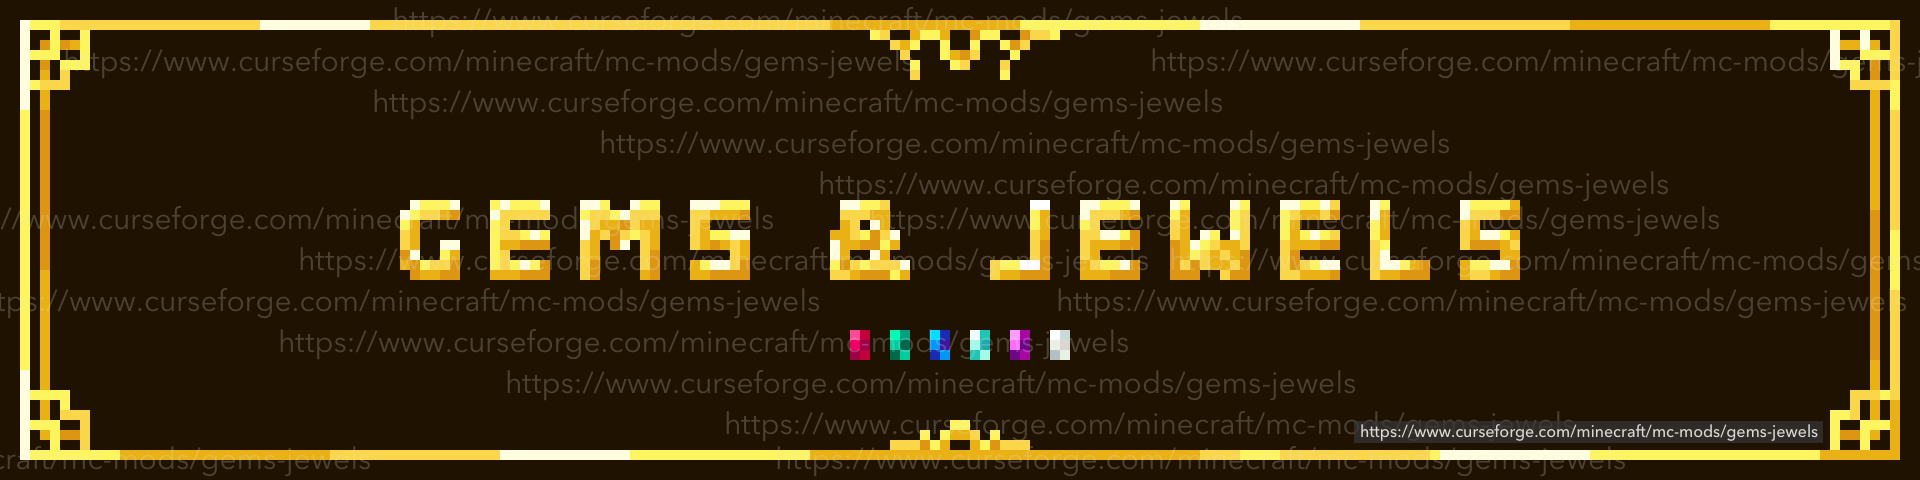 Gems & Jewels CurseForge Banner